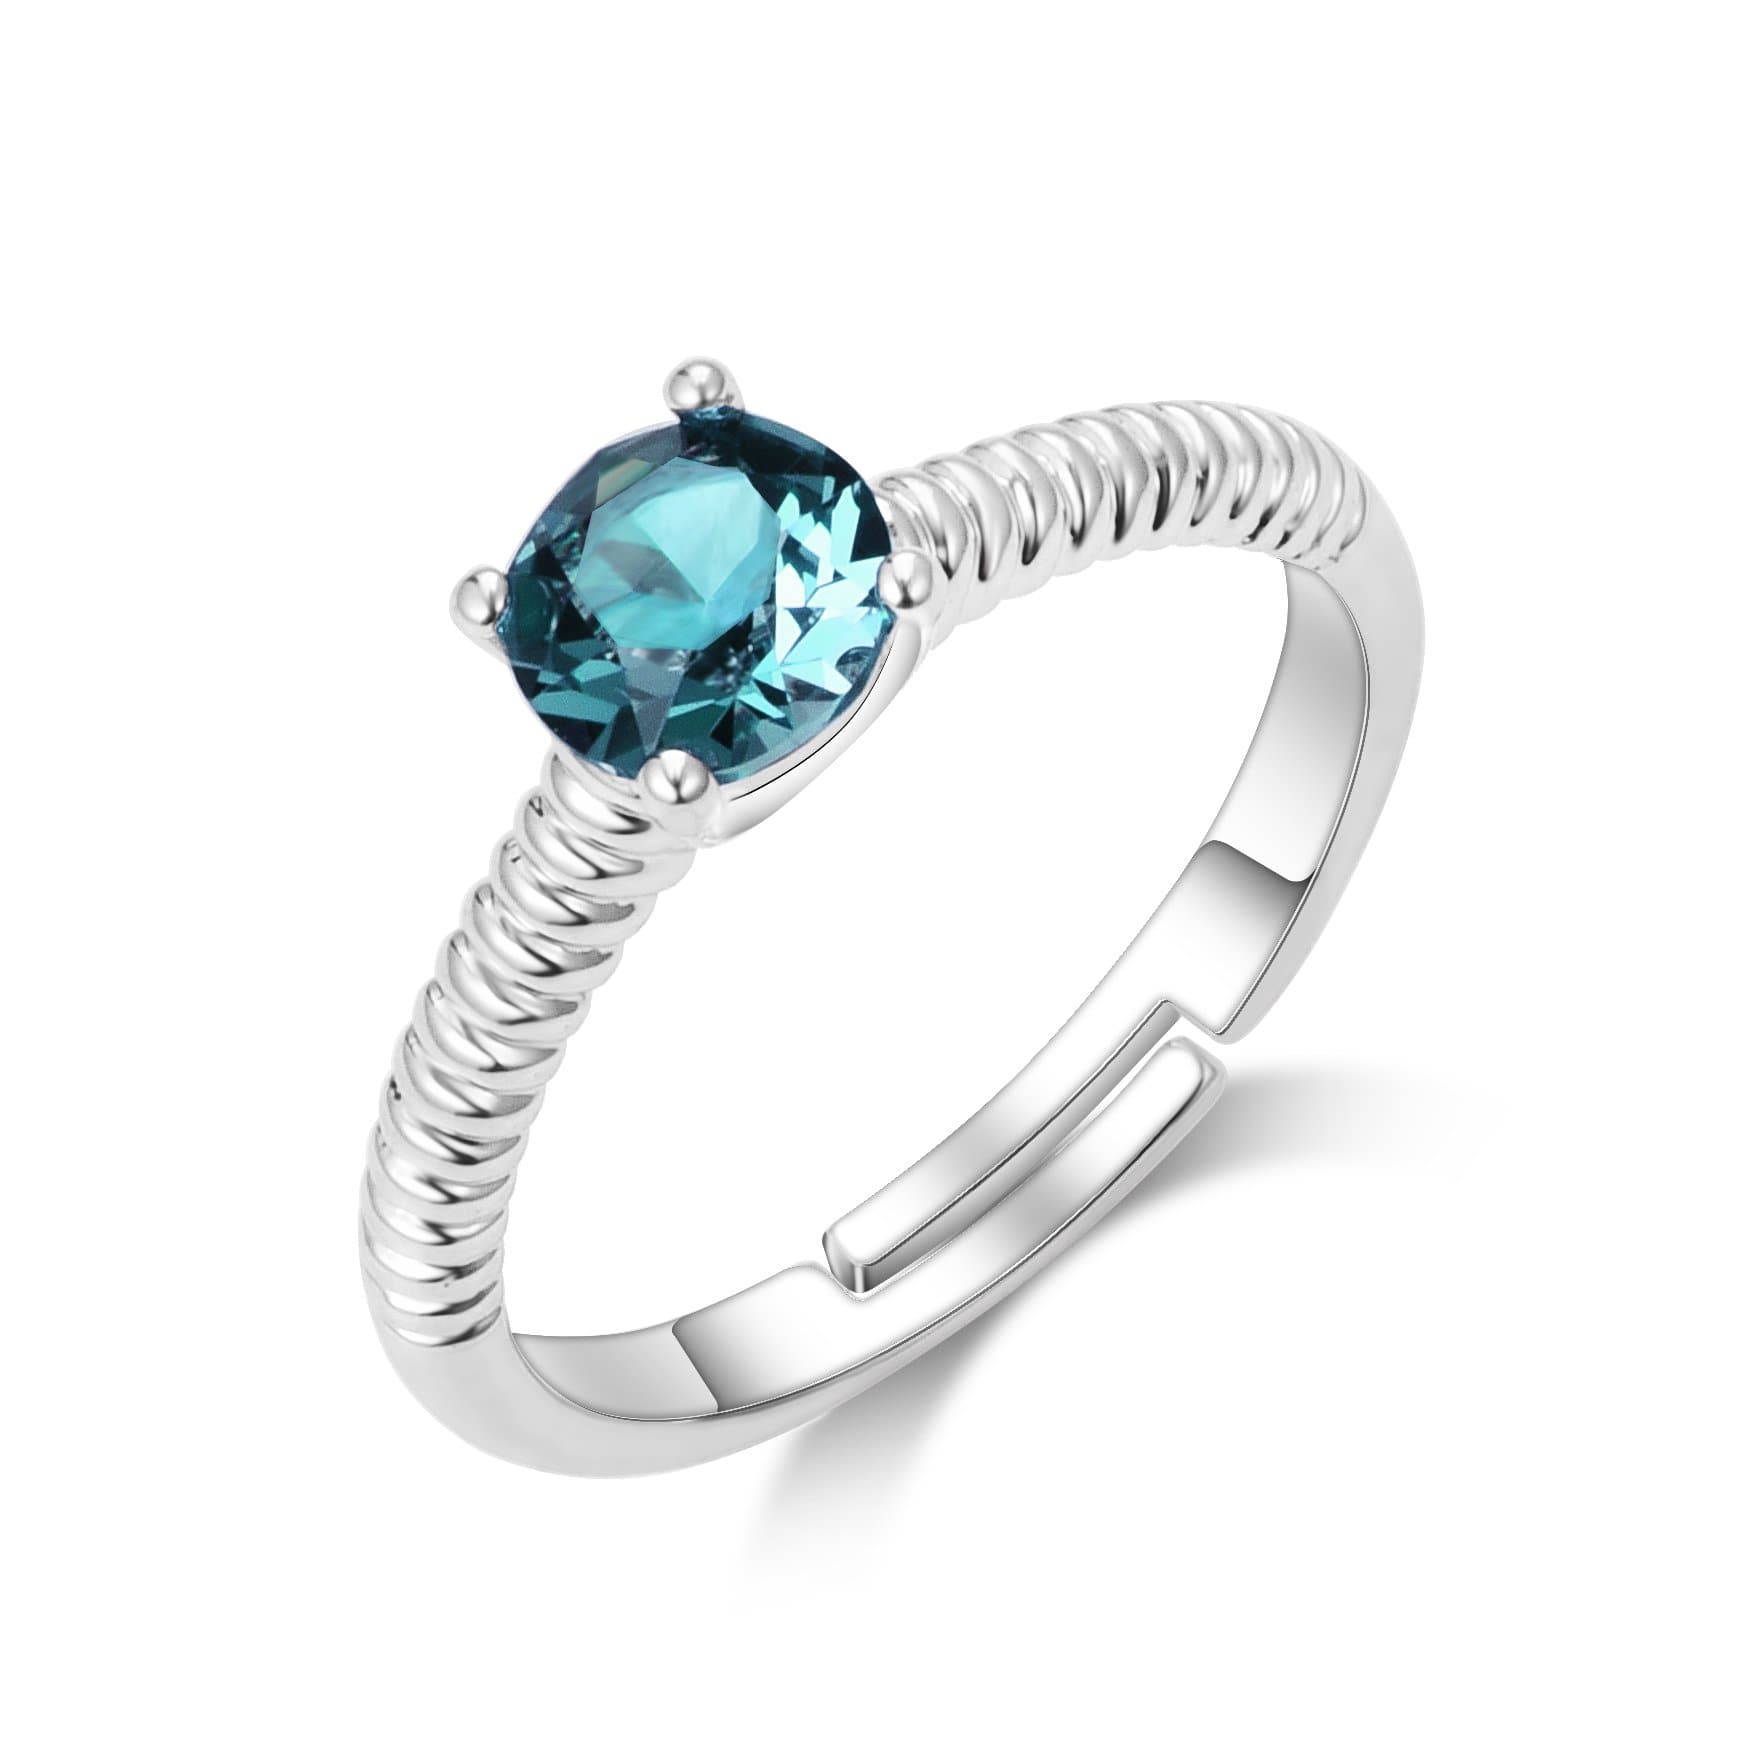 Green Adjustable Crystal Ring Created with Zircondia® Crystals by Philip Jones Jewellery